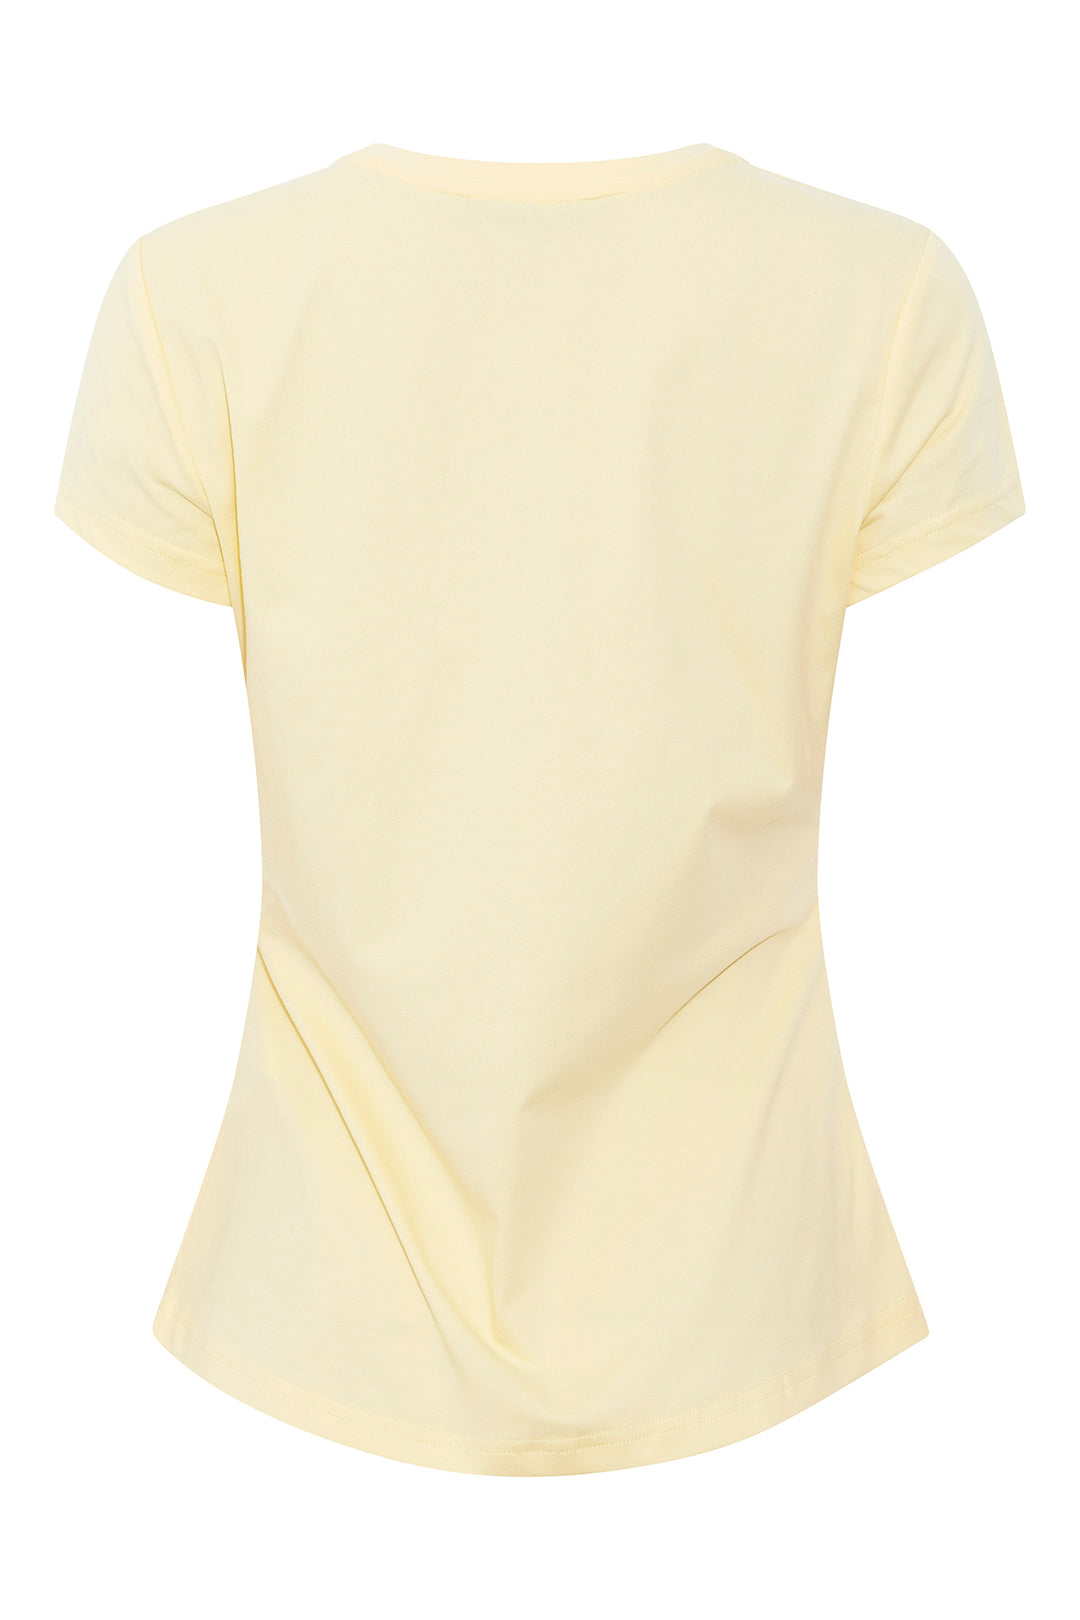 PBO Philosopher T-shirt T-SHIRTS 703 Soft yellow